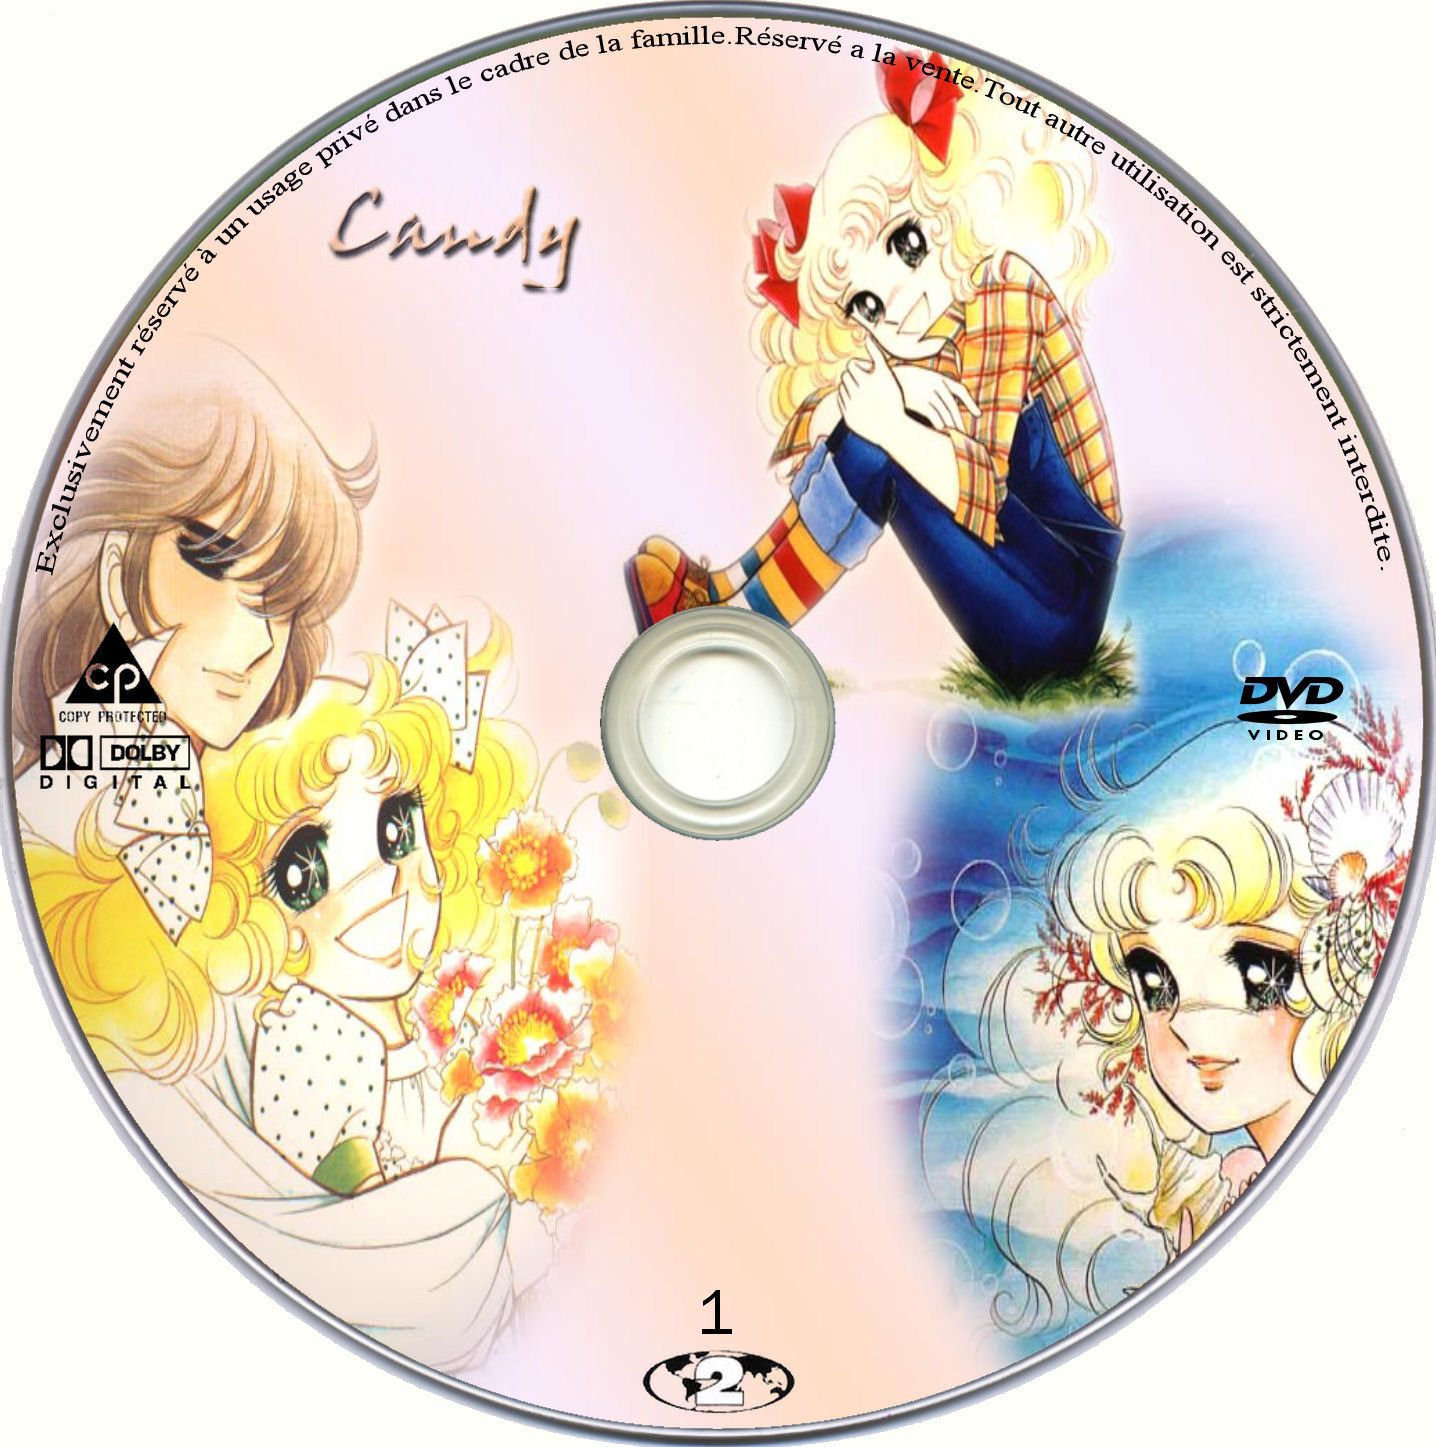 Candy dvd 1 custom